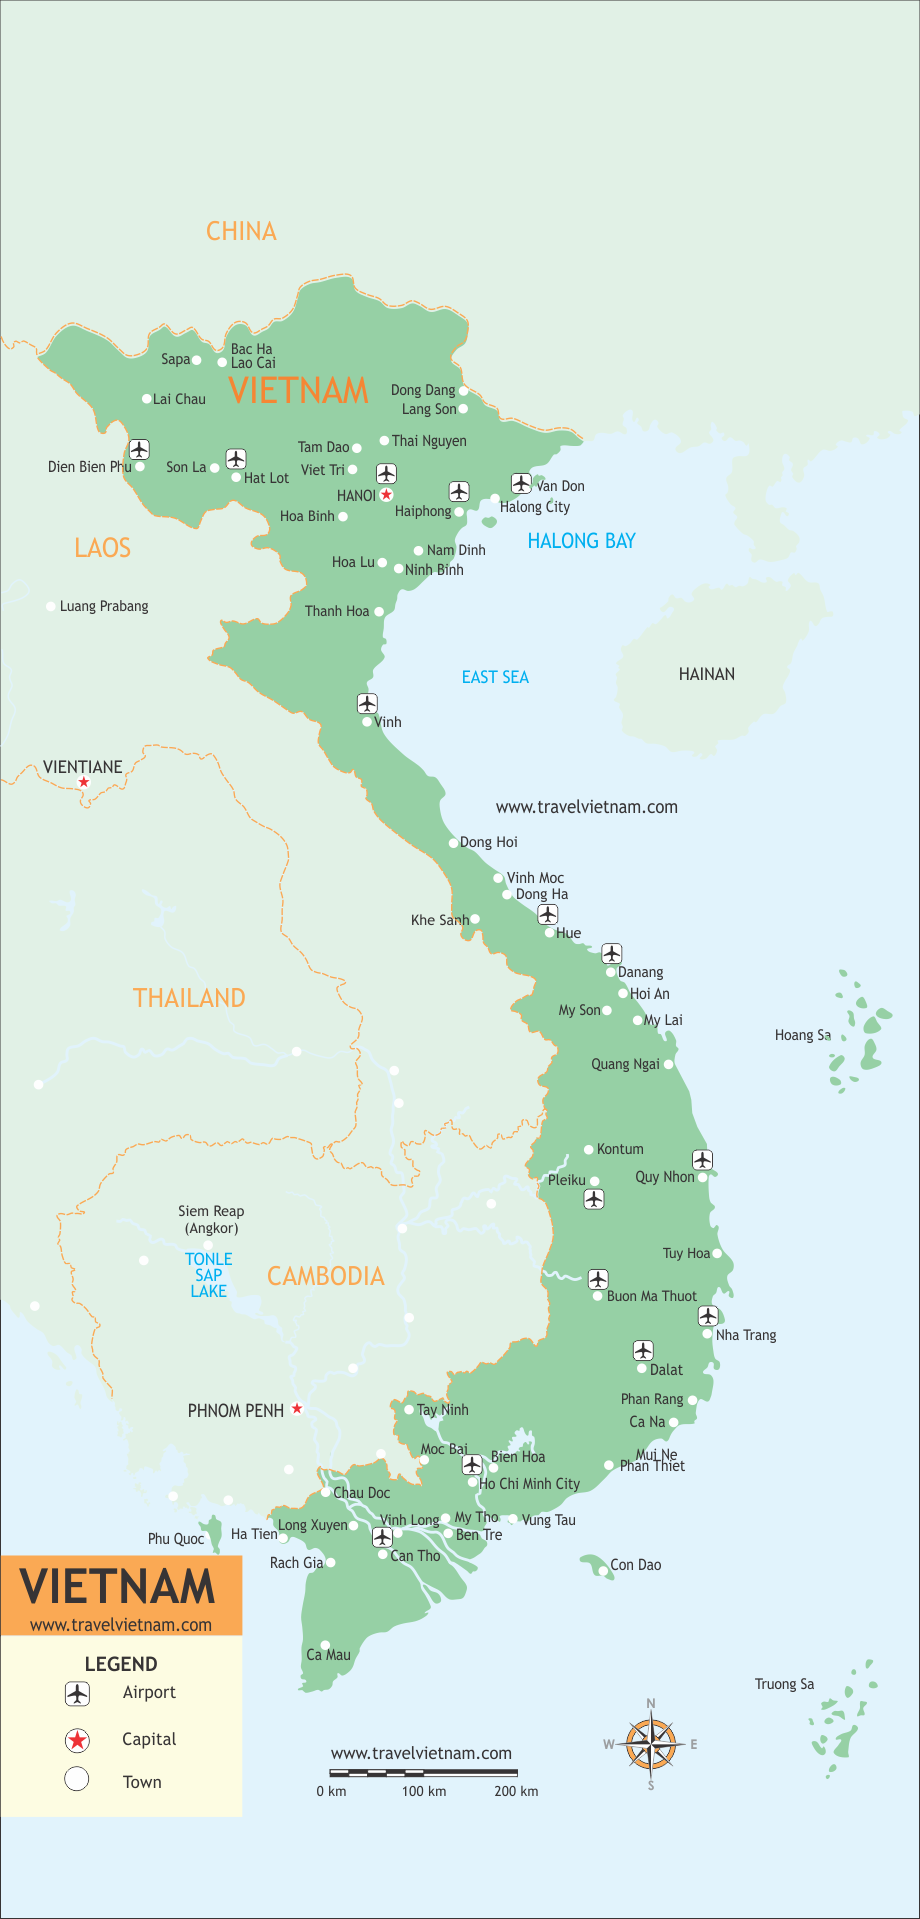 Vietnam Travel Maps by TravelVietnam.Com